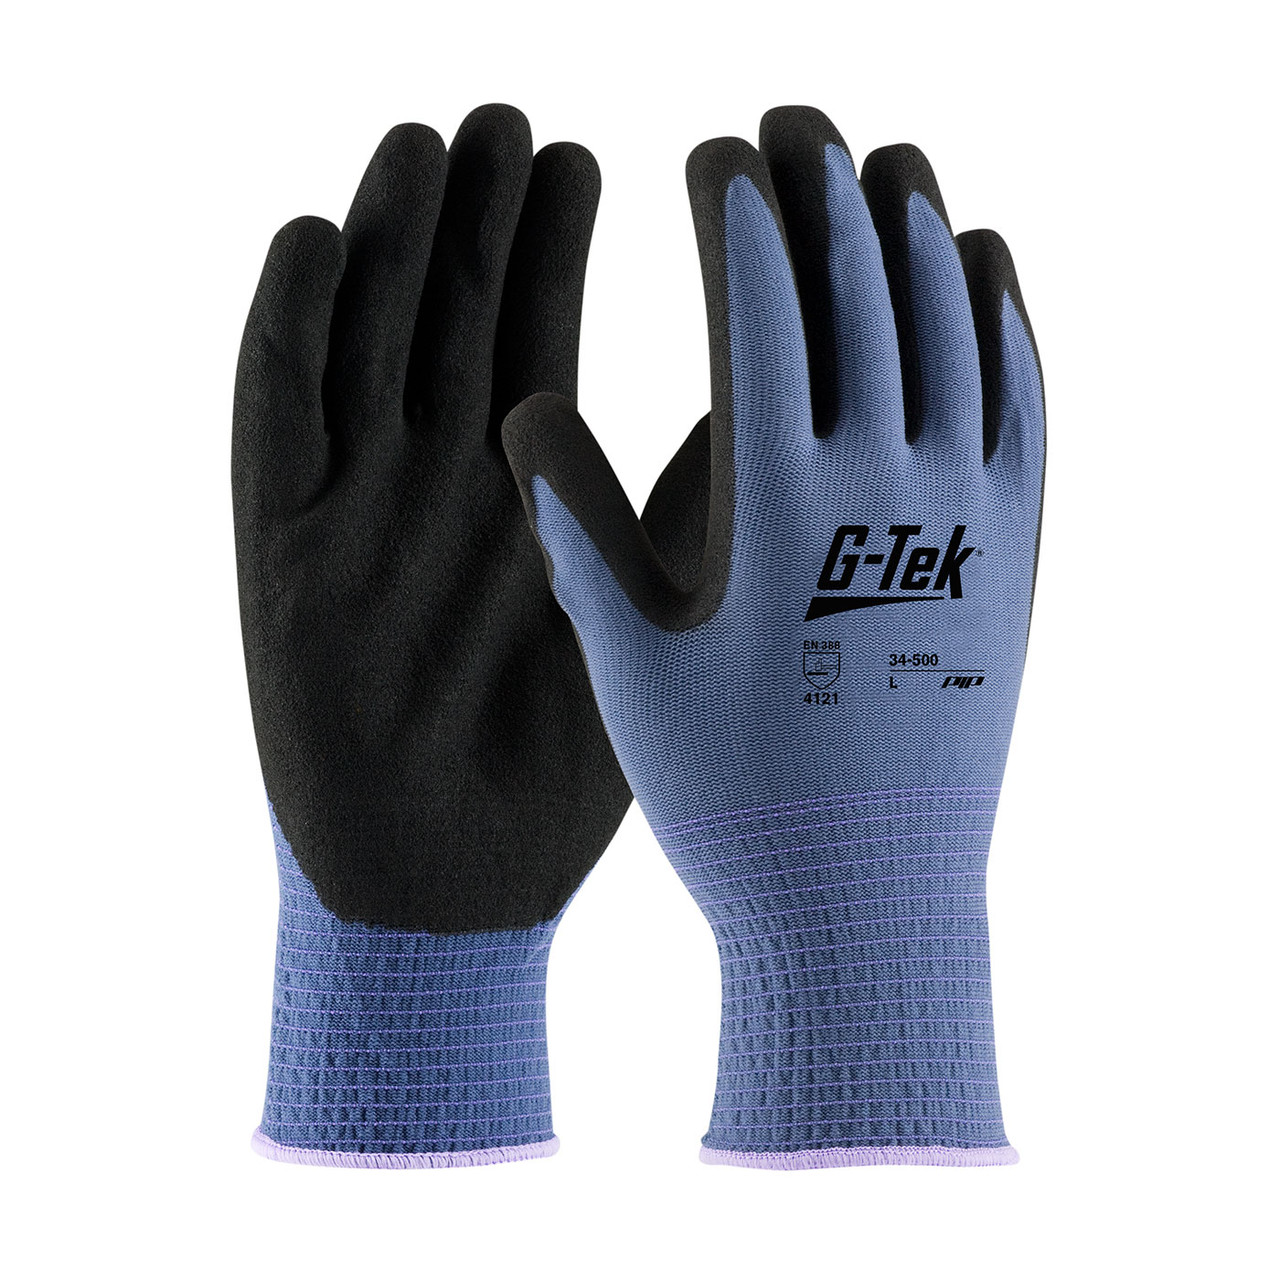 True Grip Gloves, General Purpose, Nitrile Coated, Large